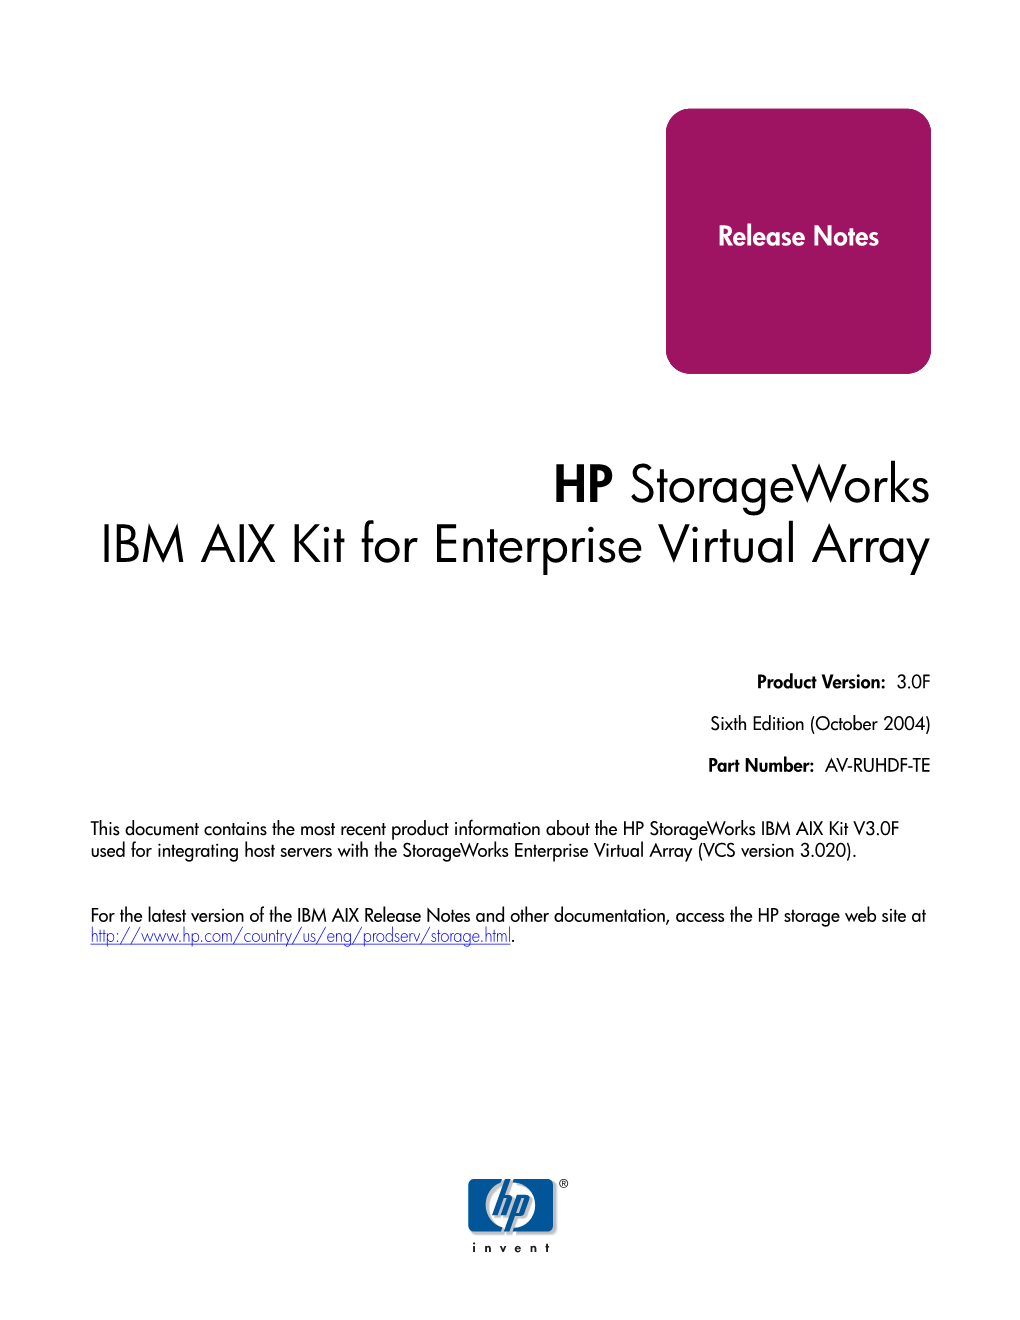 HP Storageworks Platform Kit Enterprise Virtual Array Release